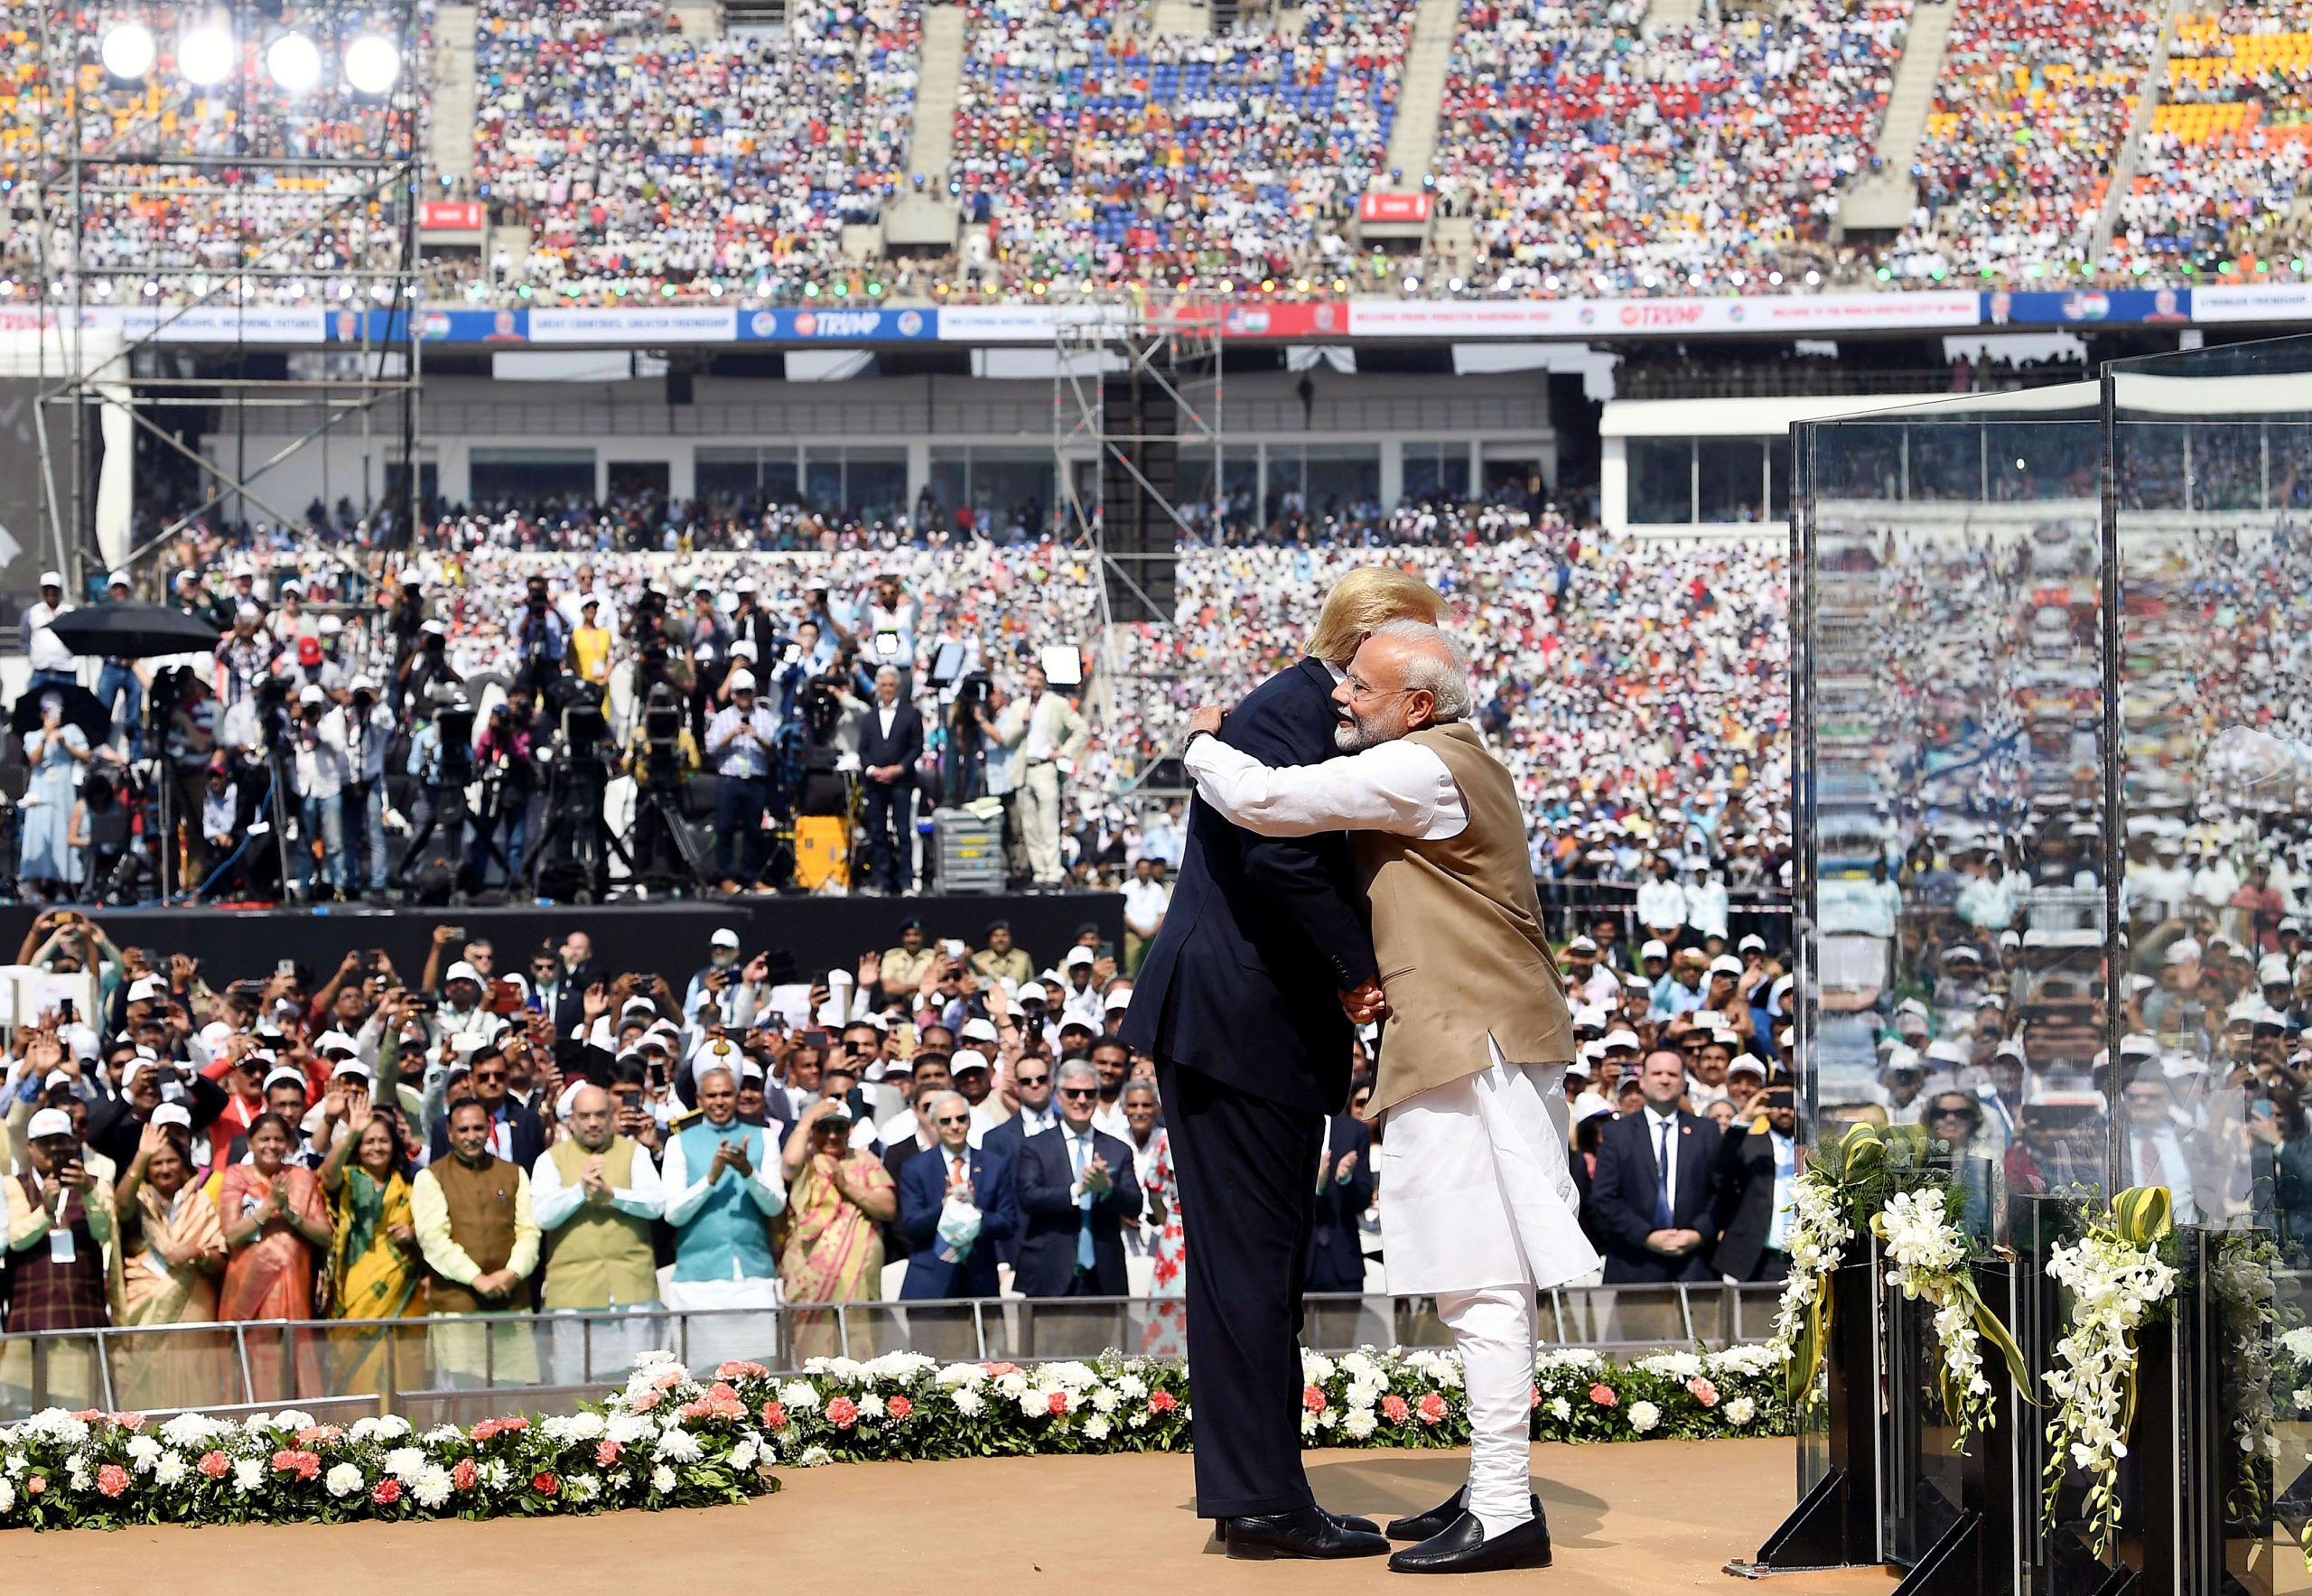 “Doing a terrific job”: Donald Trump praises PM Modi